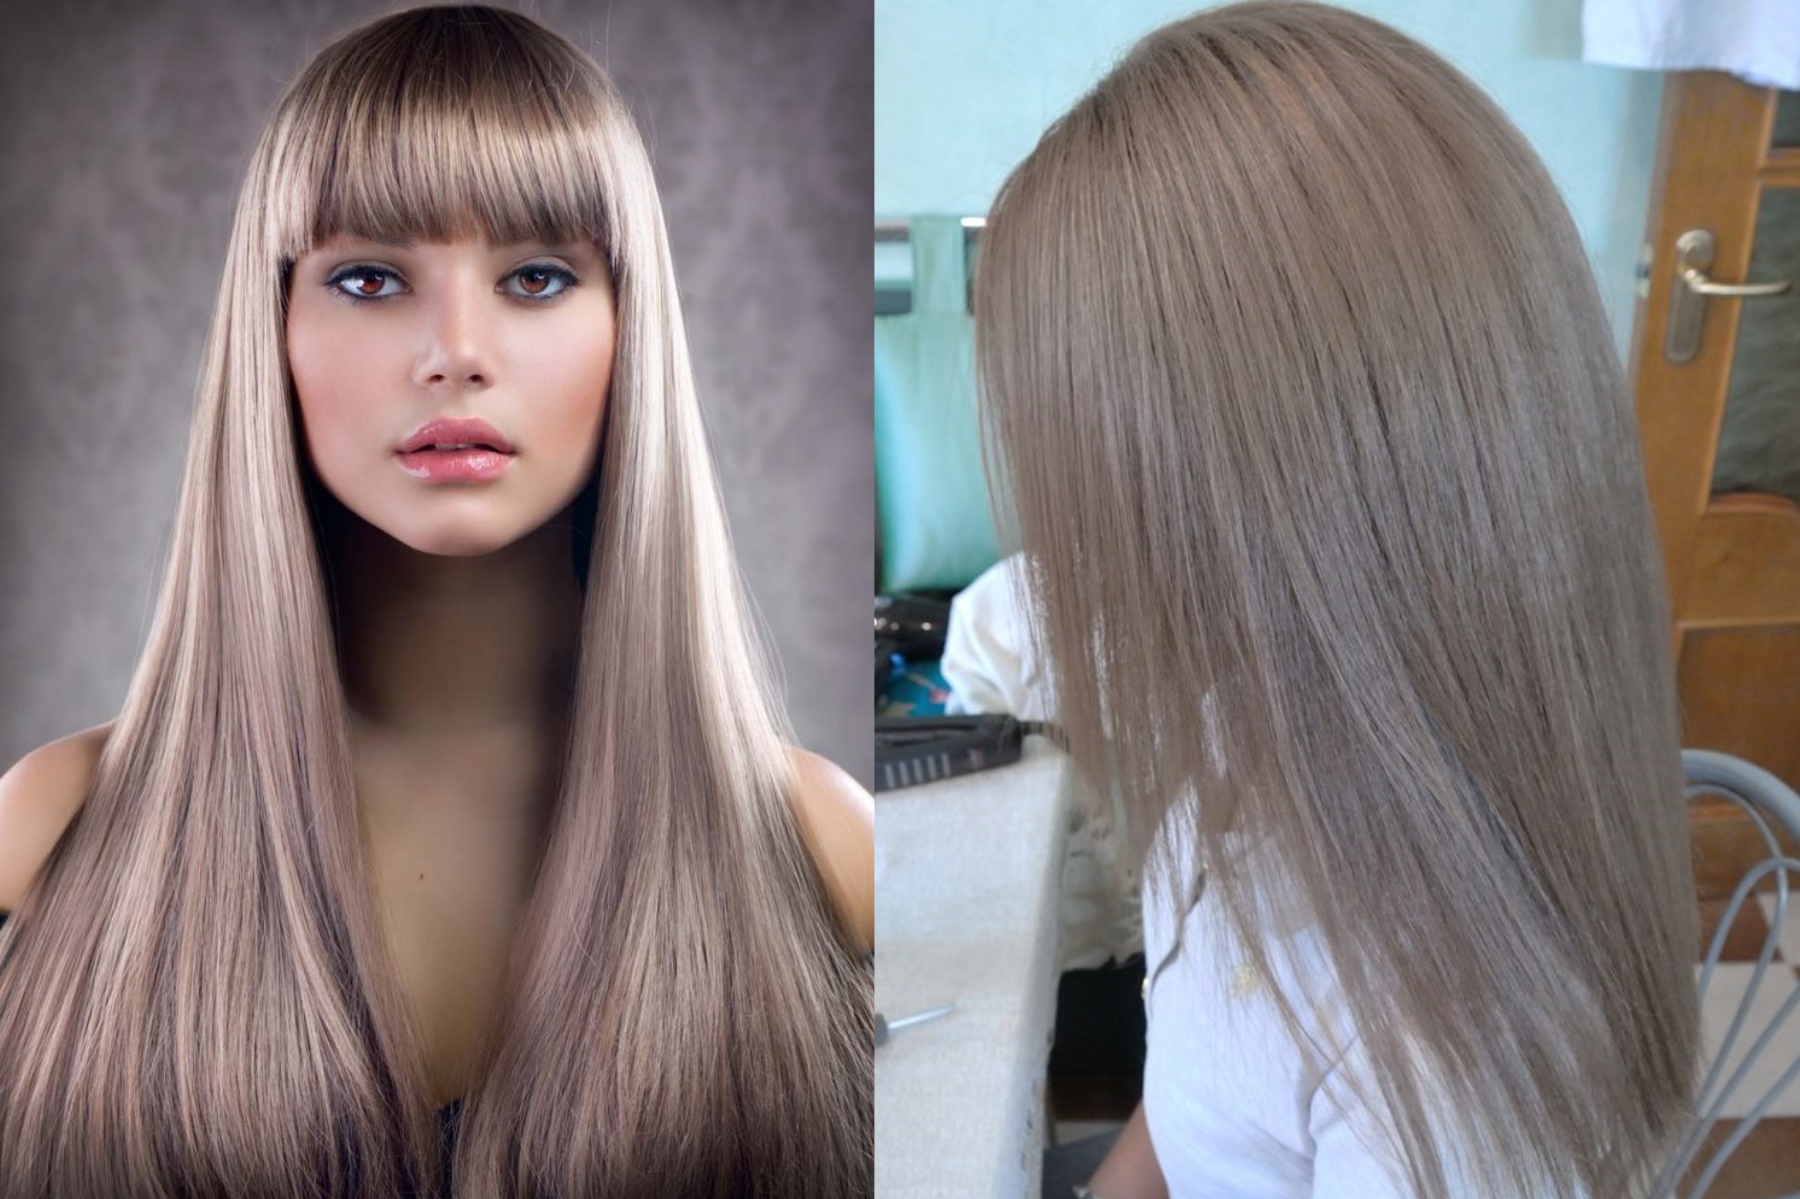 Фото бежево русый цвет волос фото до и после